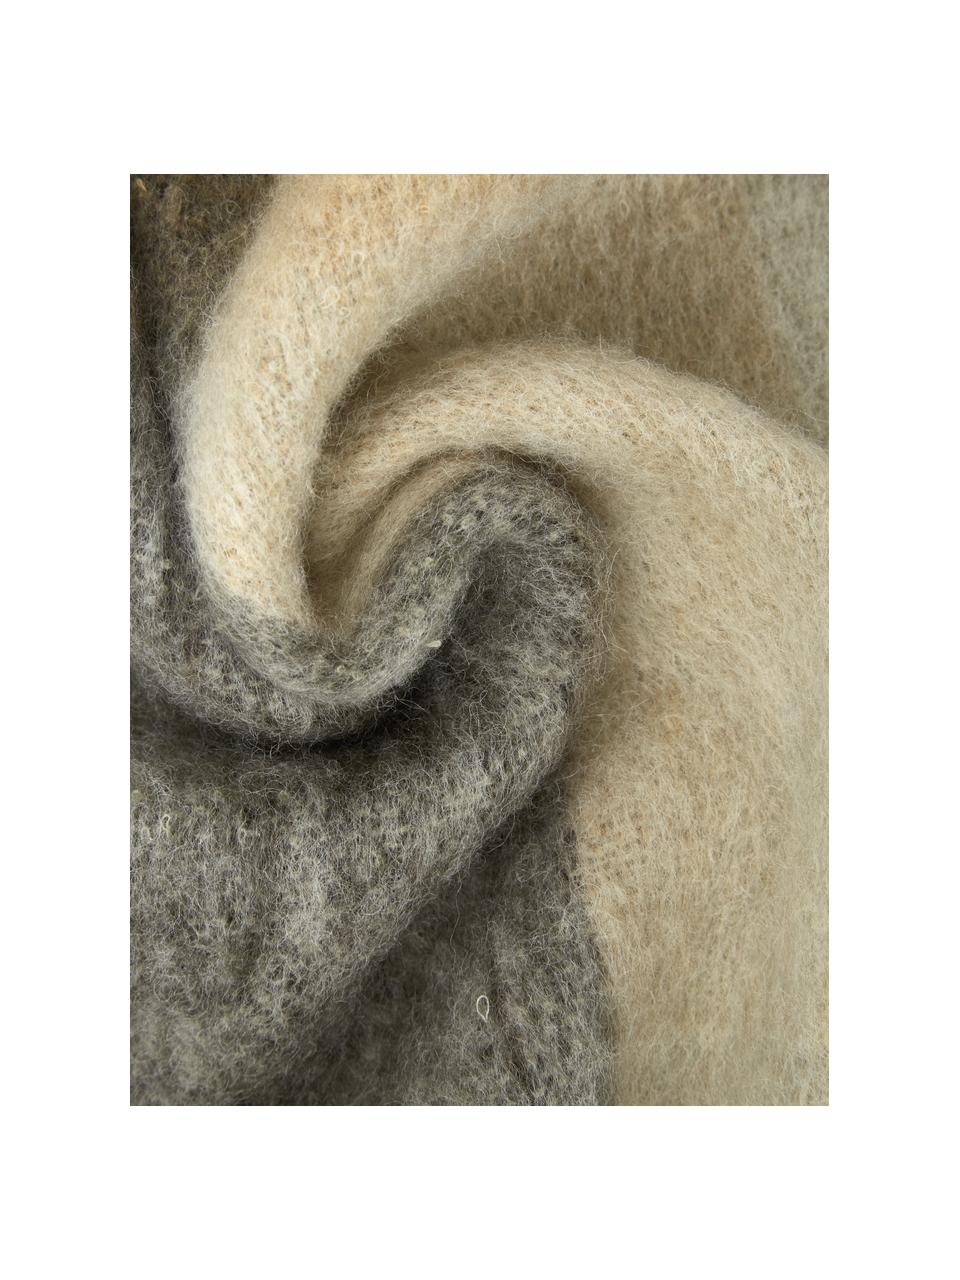 Wollen plaid Check met franjes in bruin/beige, 50% wol, 50% acryl, Beige, bruin, 125 x 150 cm